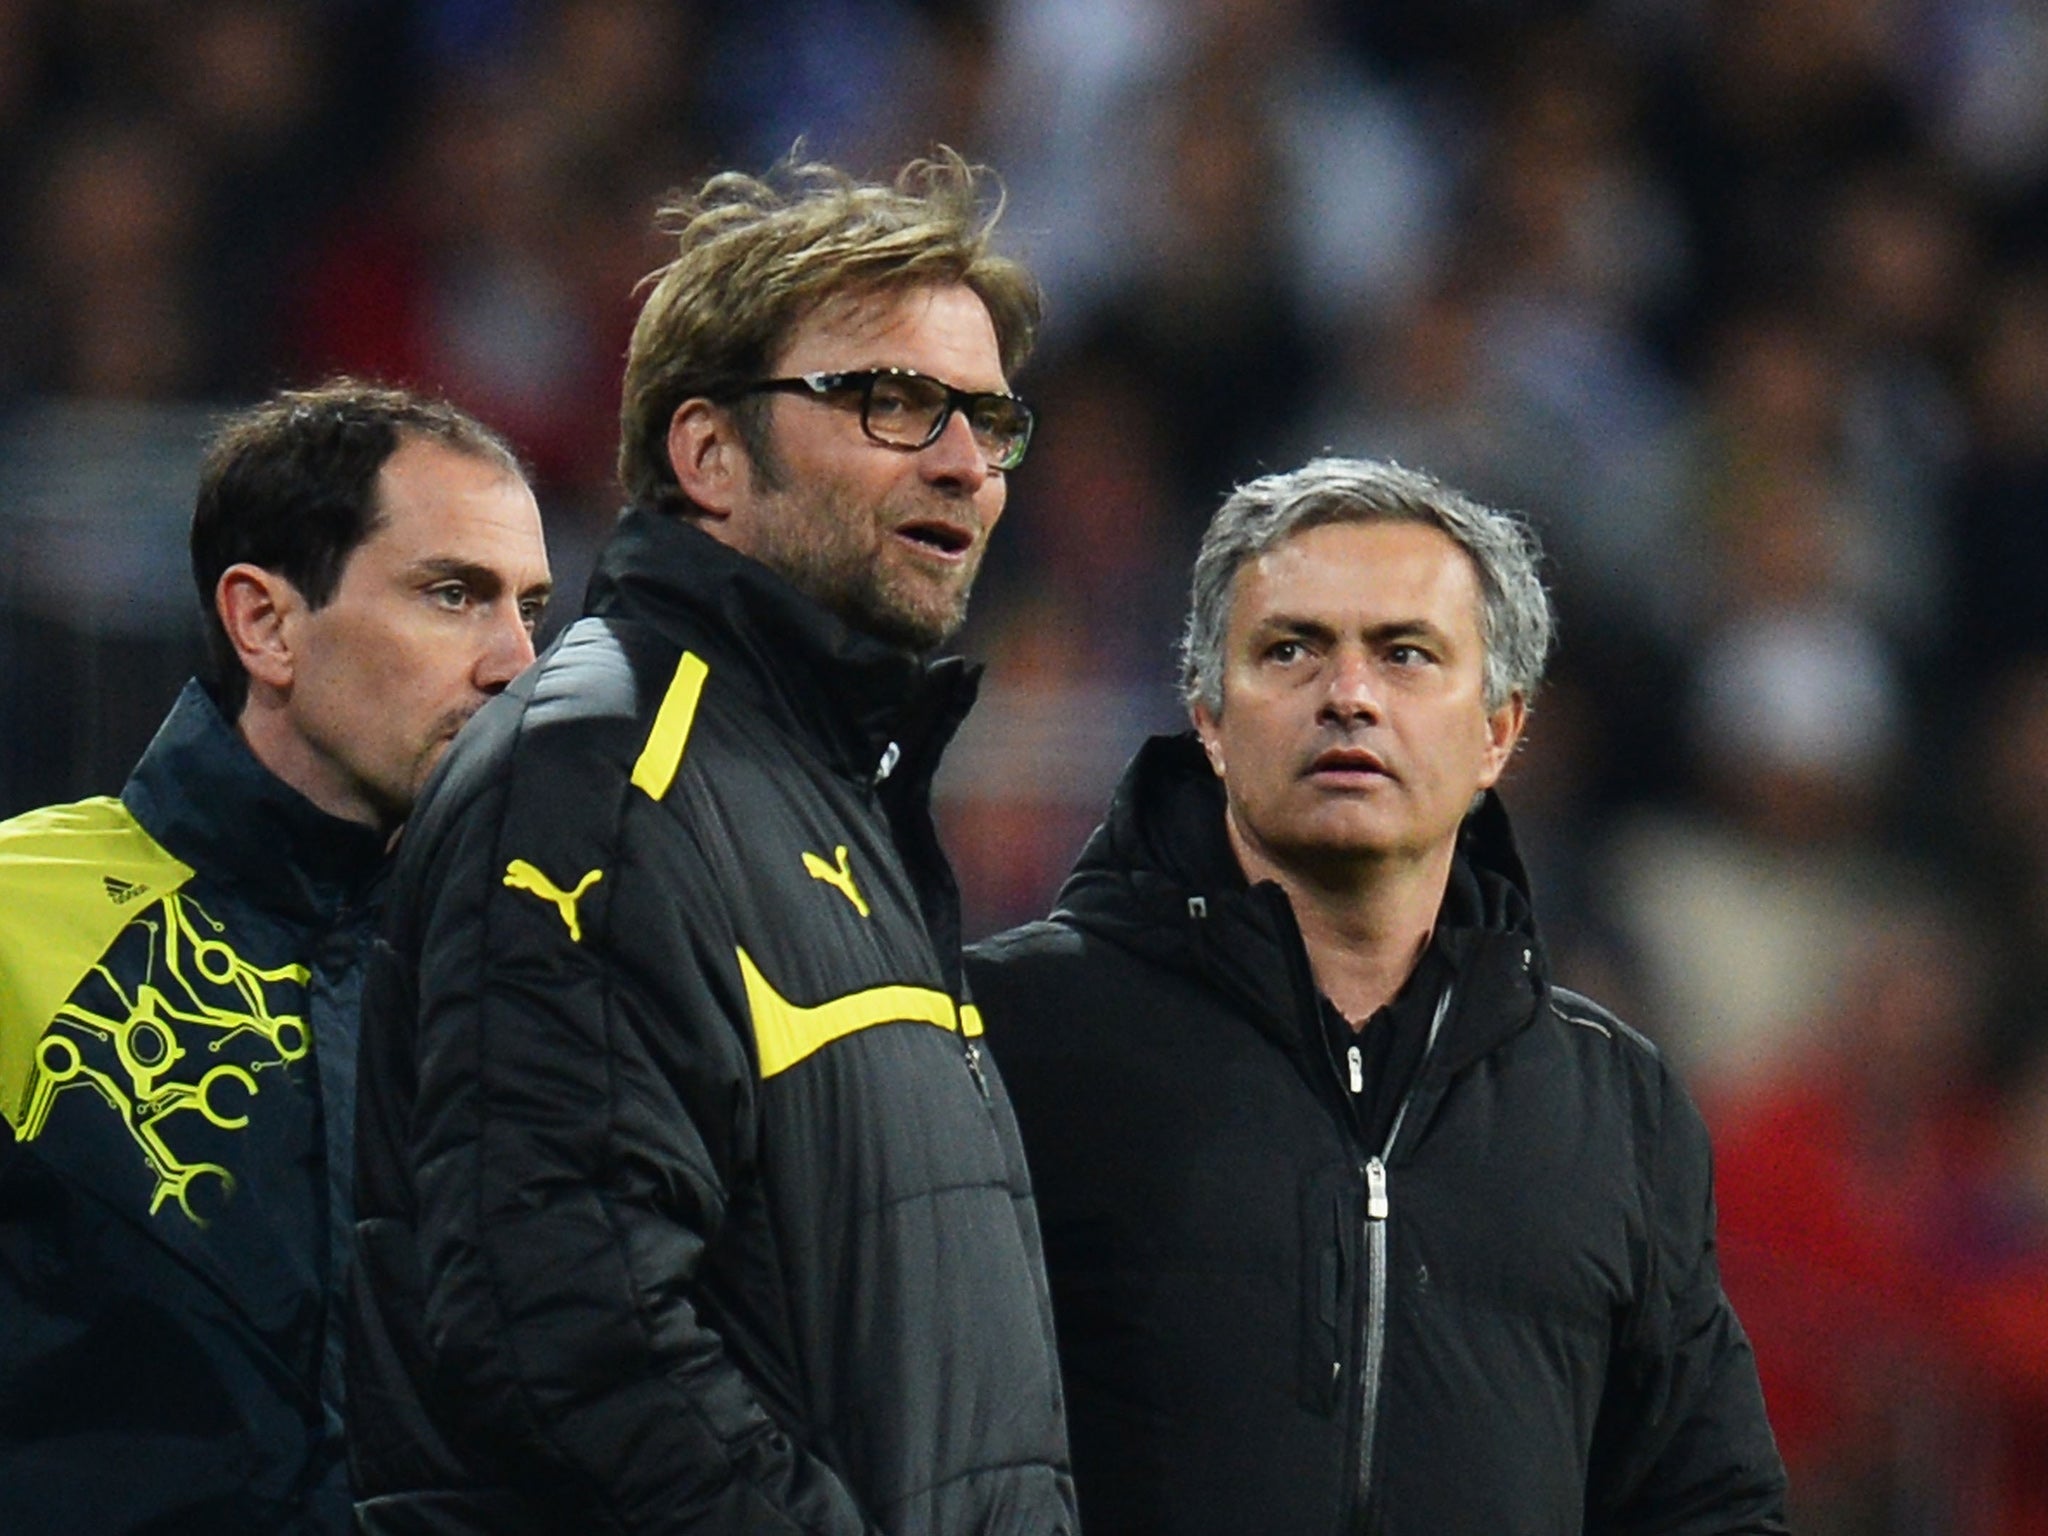 Jurgen Klopp and Jose Mourinho while managing Borussia Dortmund and Real Madrid respectively.